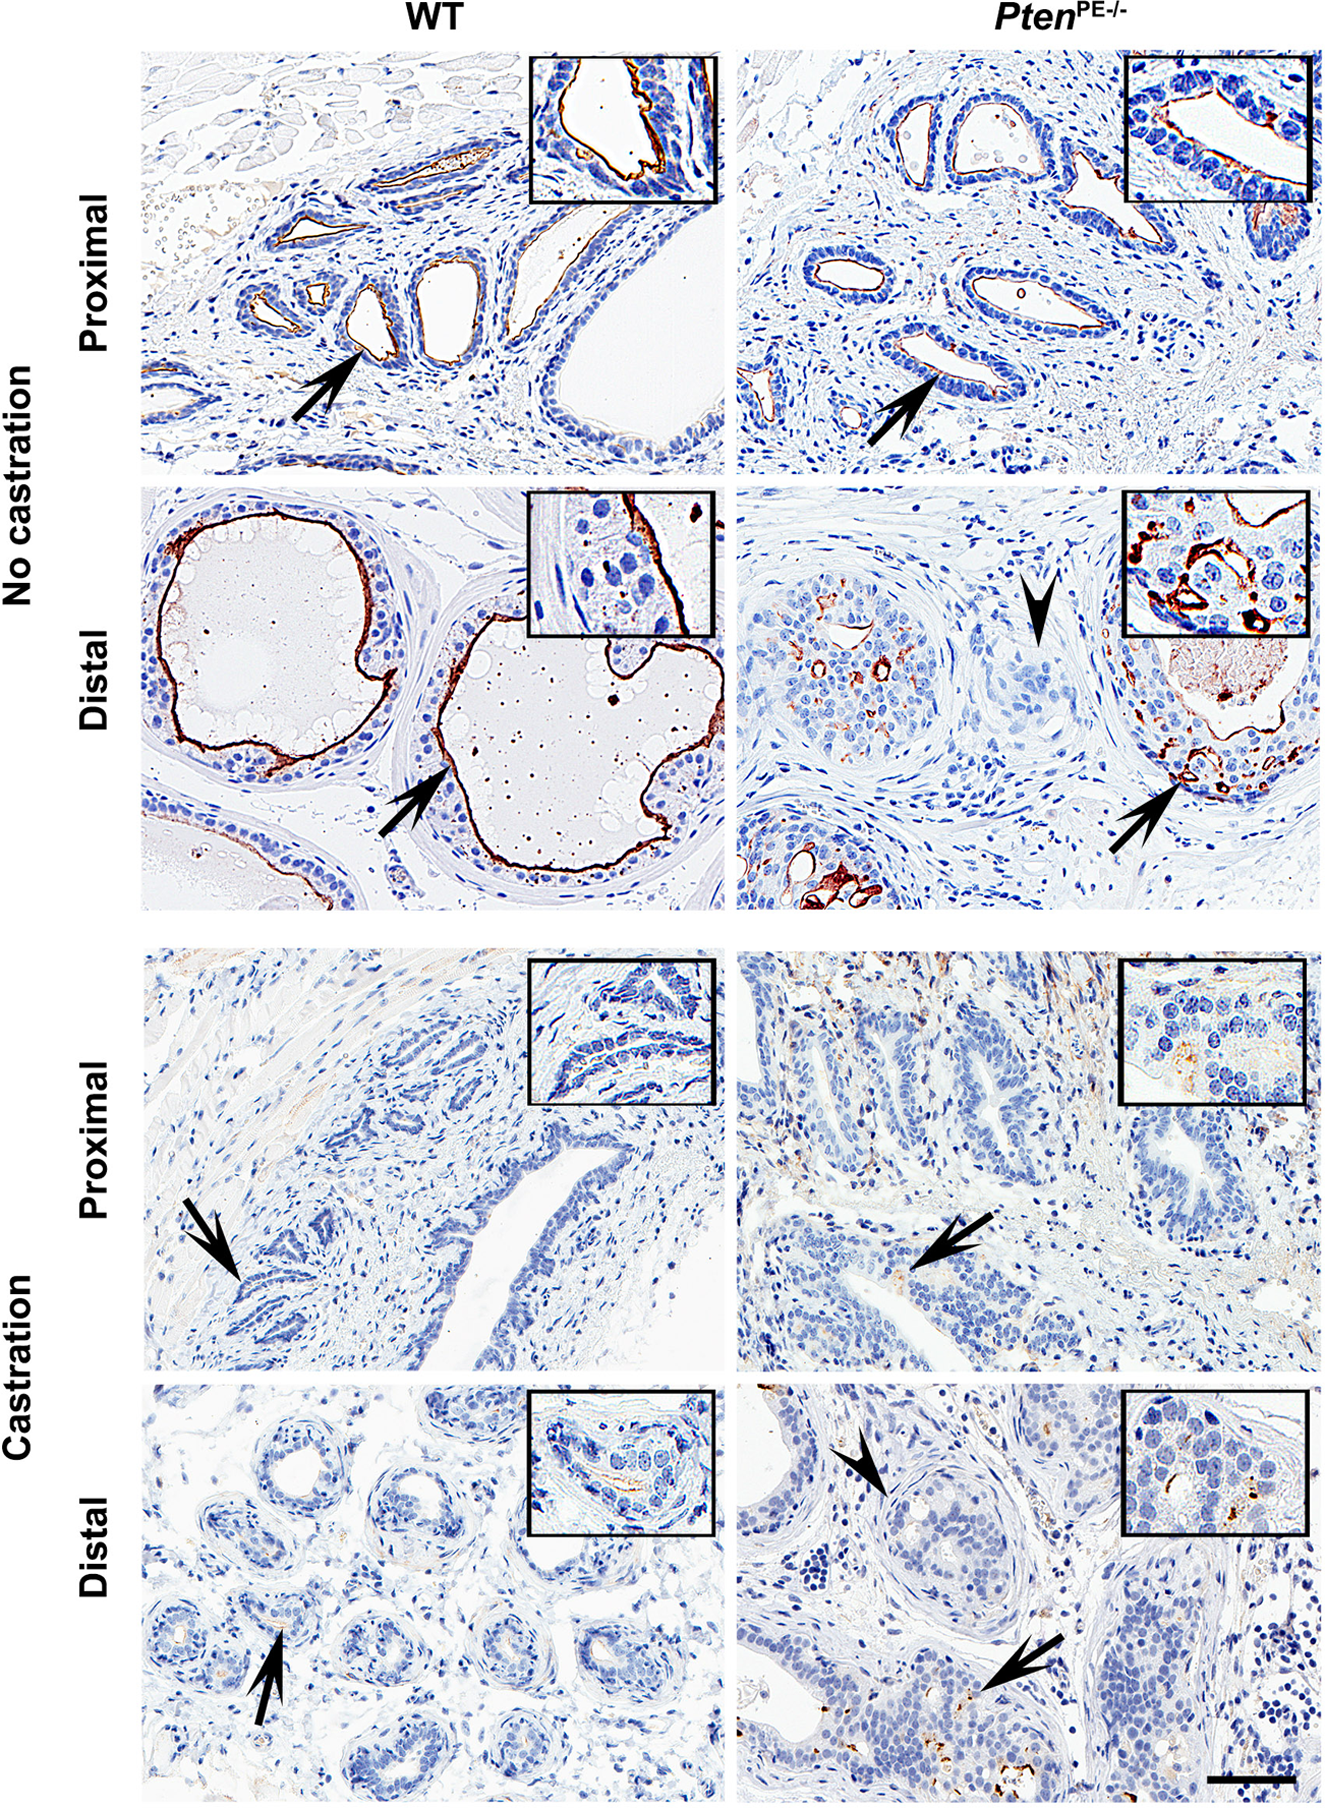 Membrane metalloendopeptidase suppresses prostate carcinogenesis